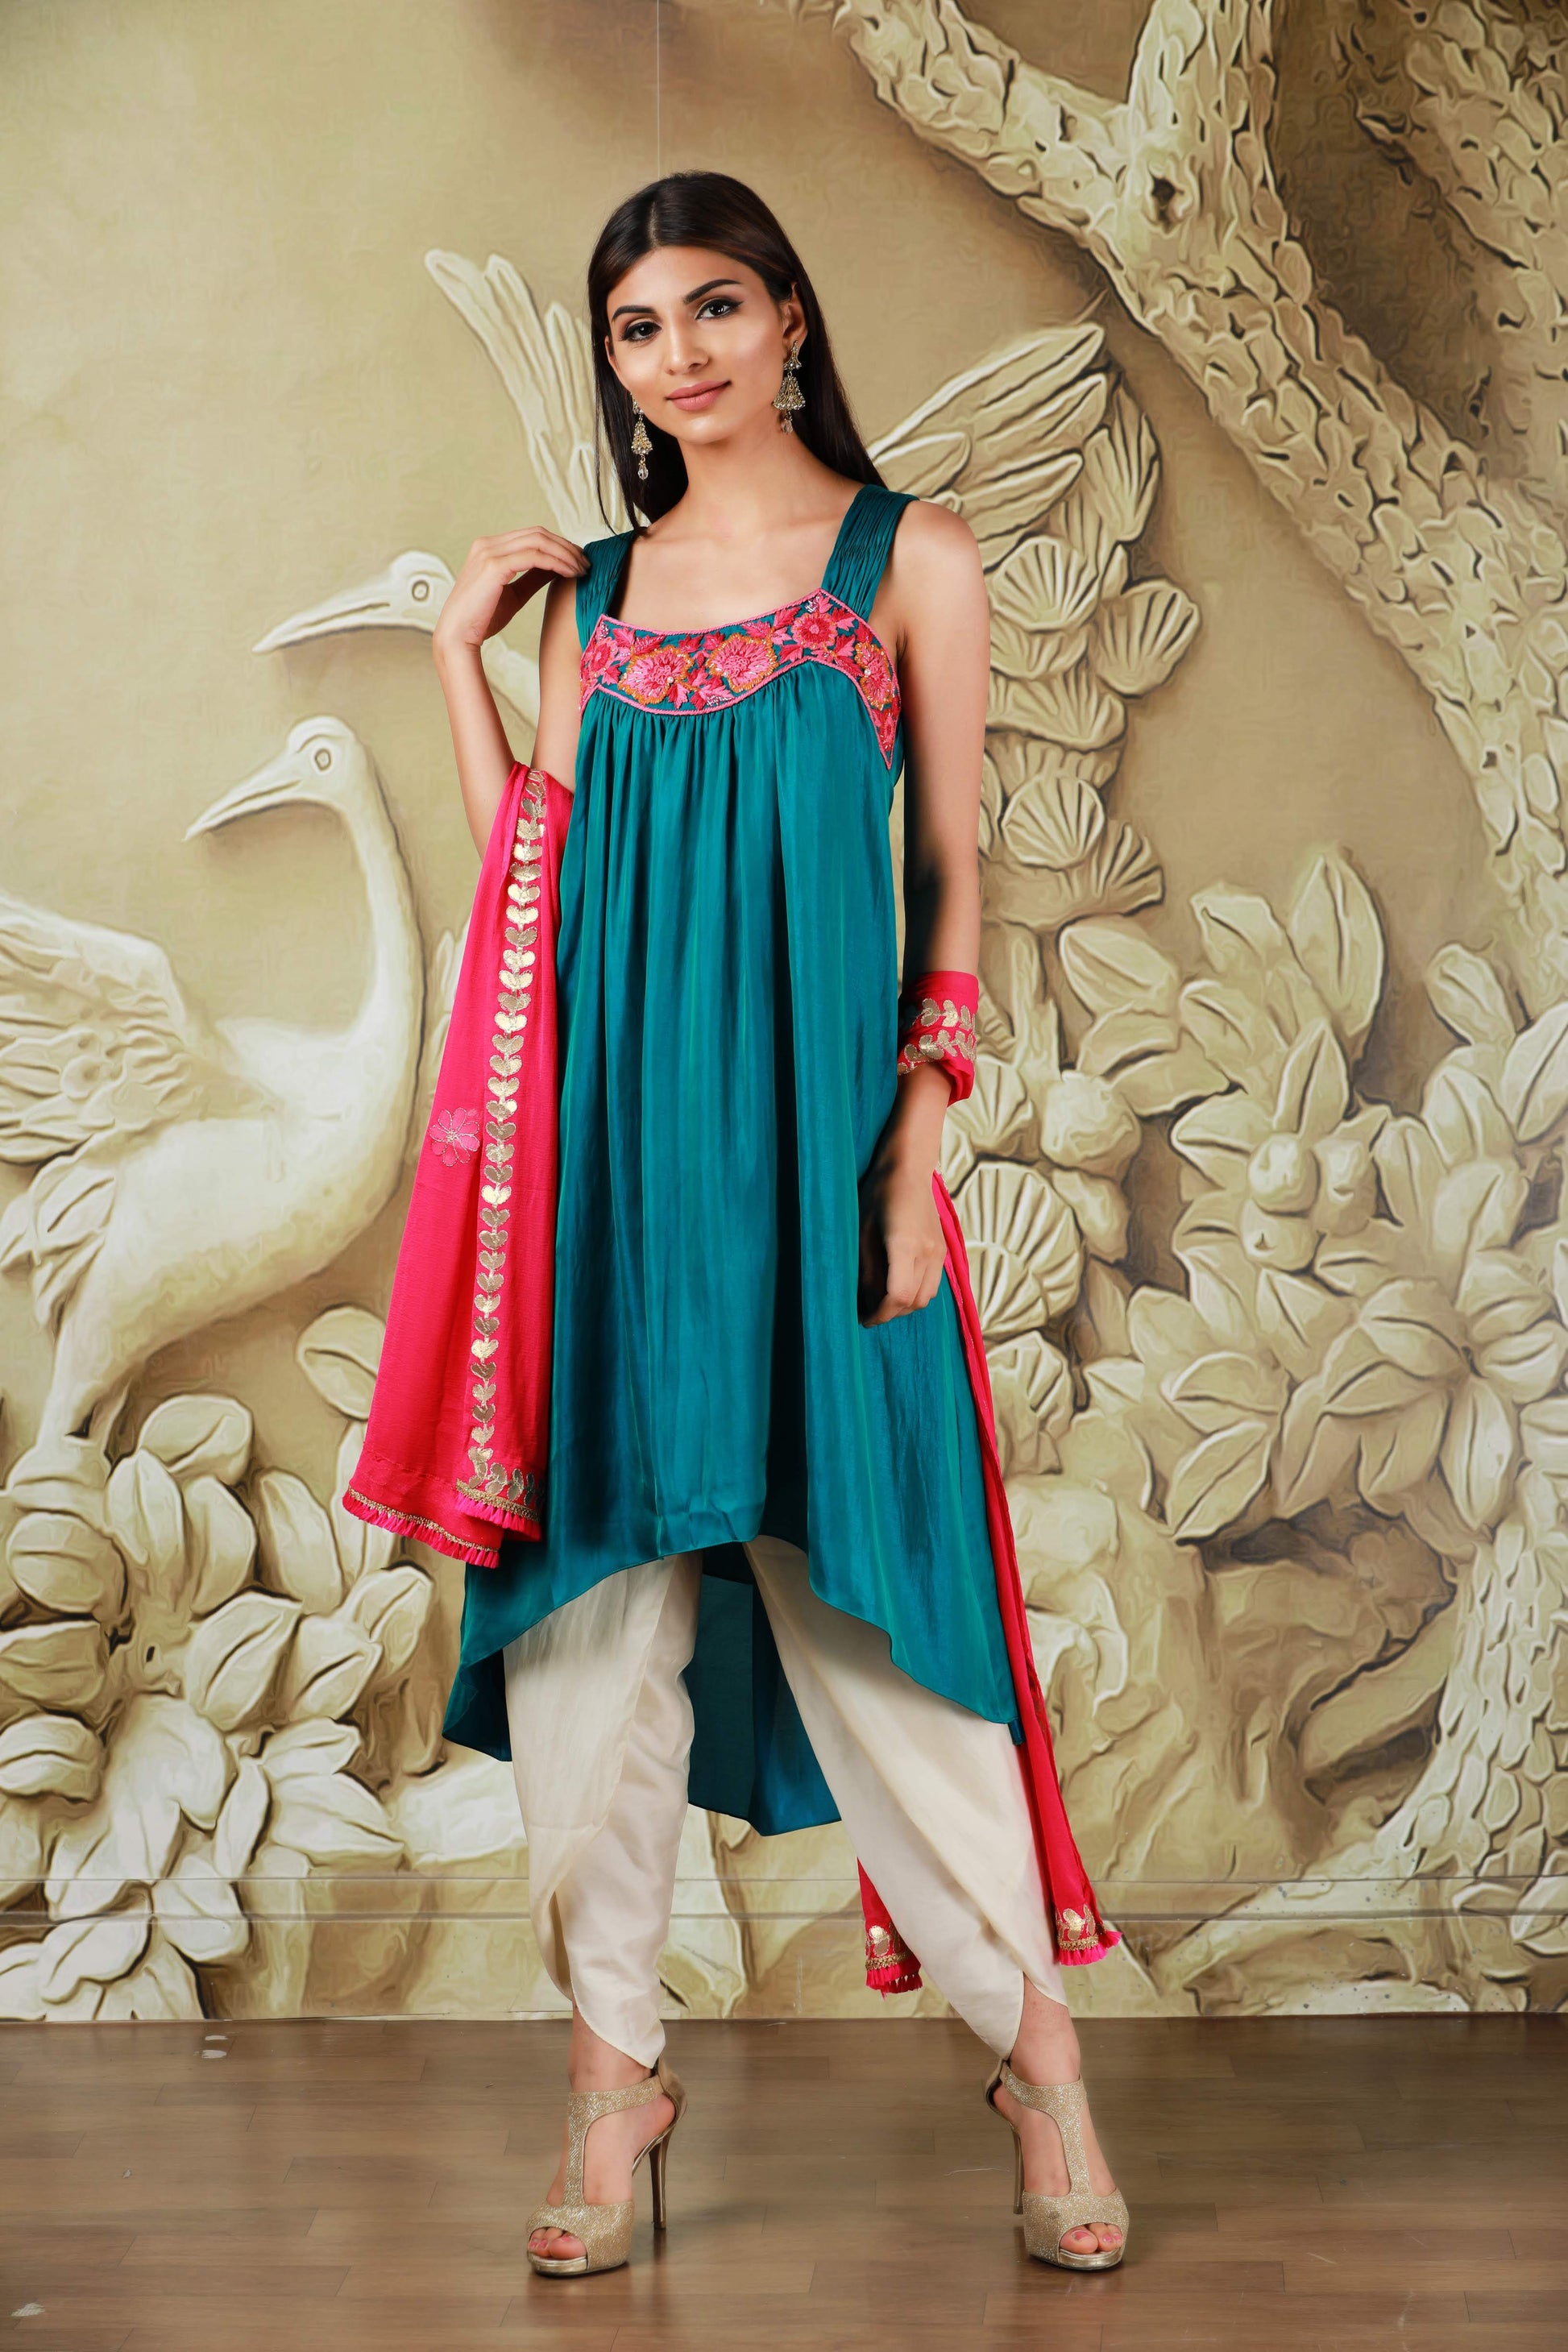 Peacock-set dress - www.styletriggers.com